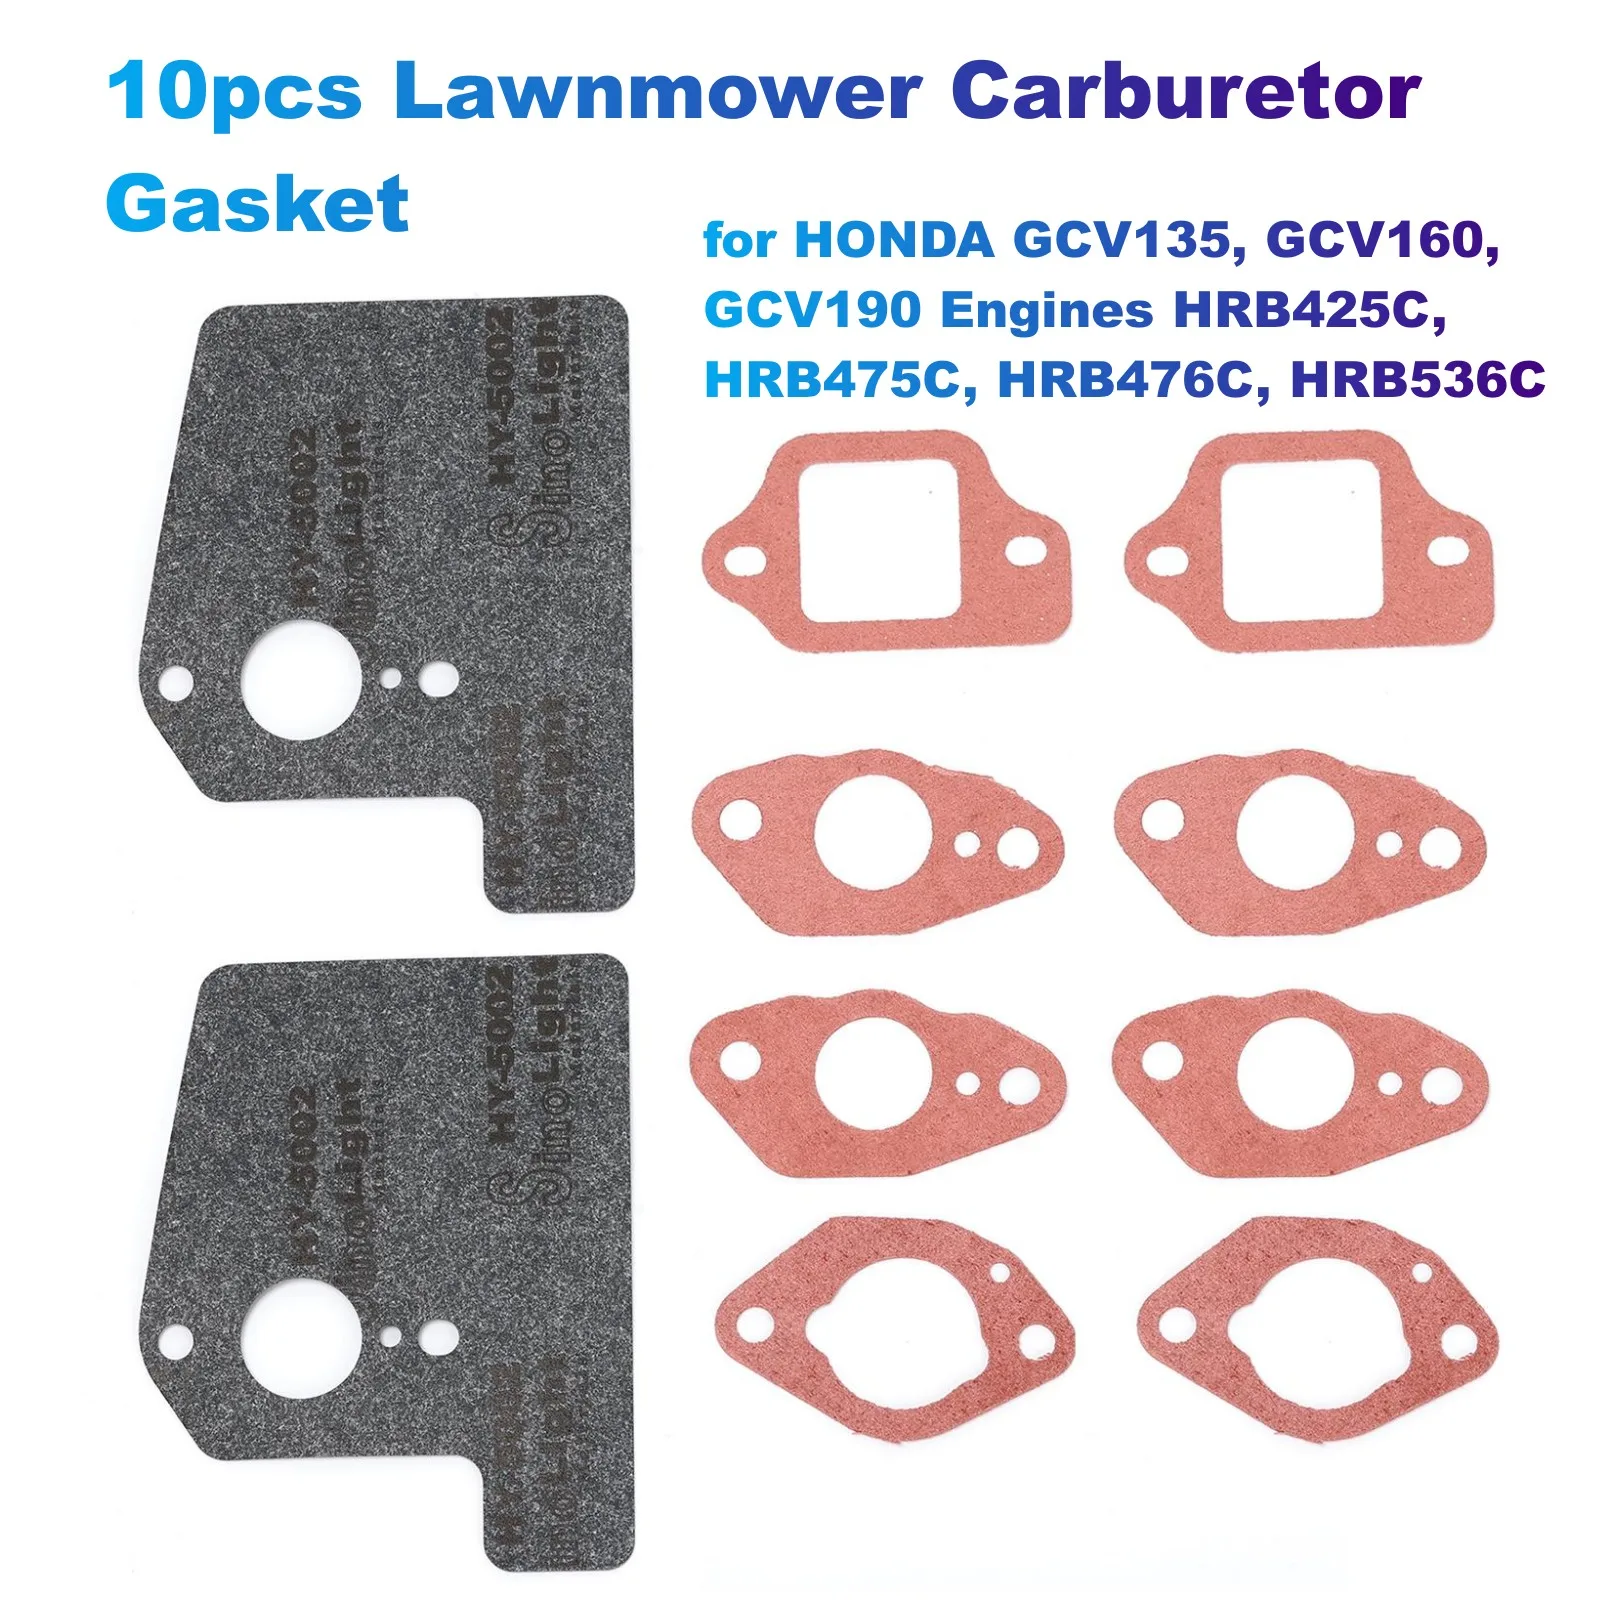 10pcs Lawnmower Carburetor Gasket for HONDA GCV135, GCV160, GCV190 Engines HRB425C, HRB475C, HRB476C, HRB536C (16221883800) 10pcs nema 17 stepper motor dampe damper cork gasket reprap isolator 42 motor absorber for 3d printer motor ender 3